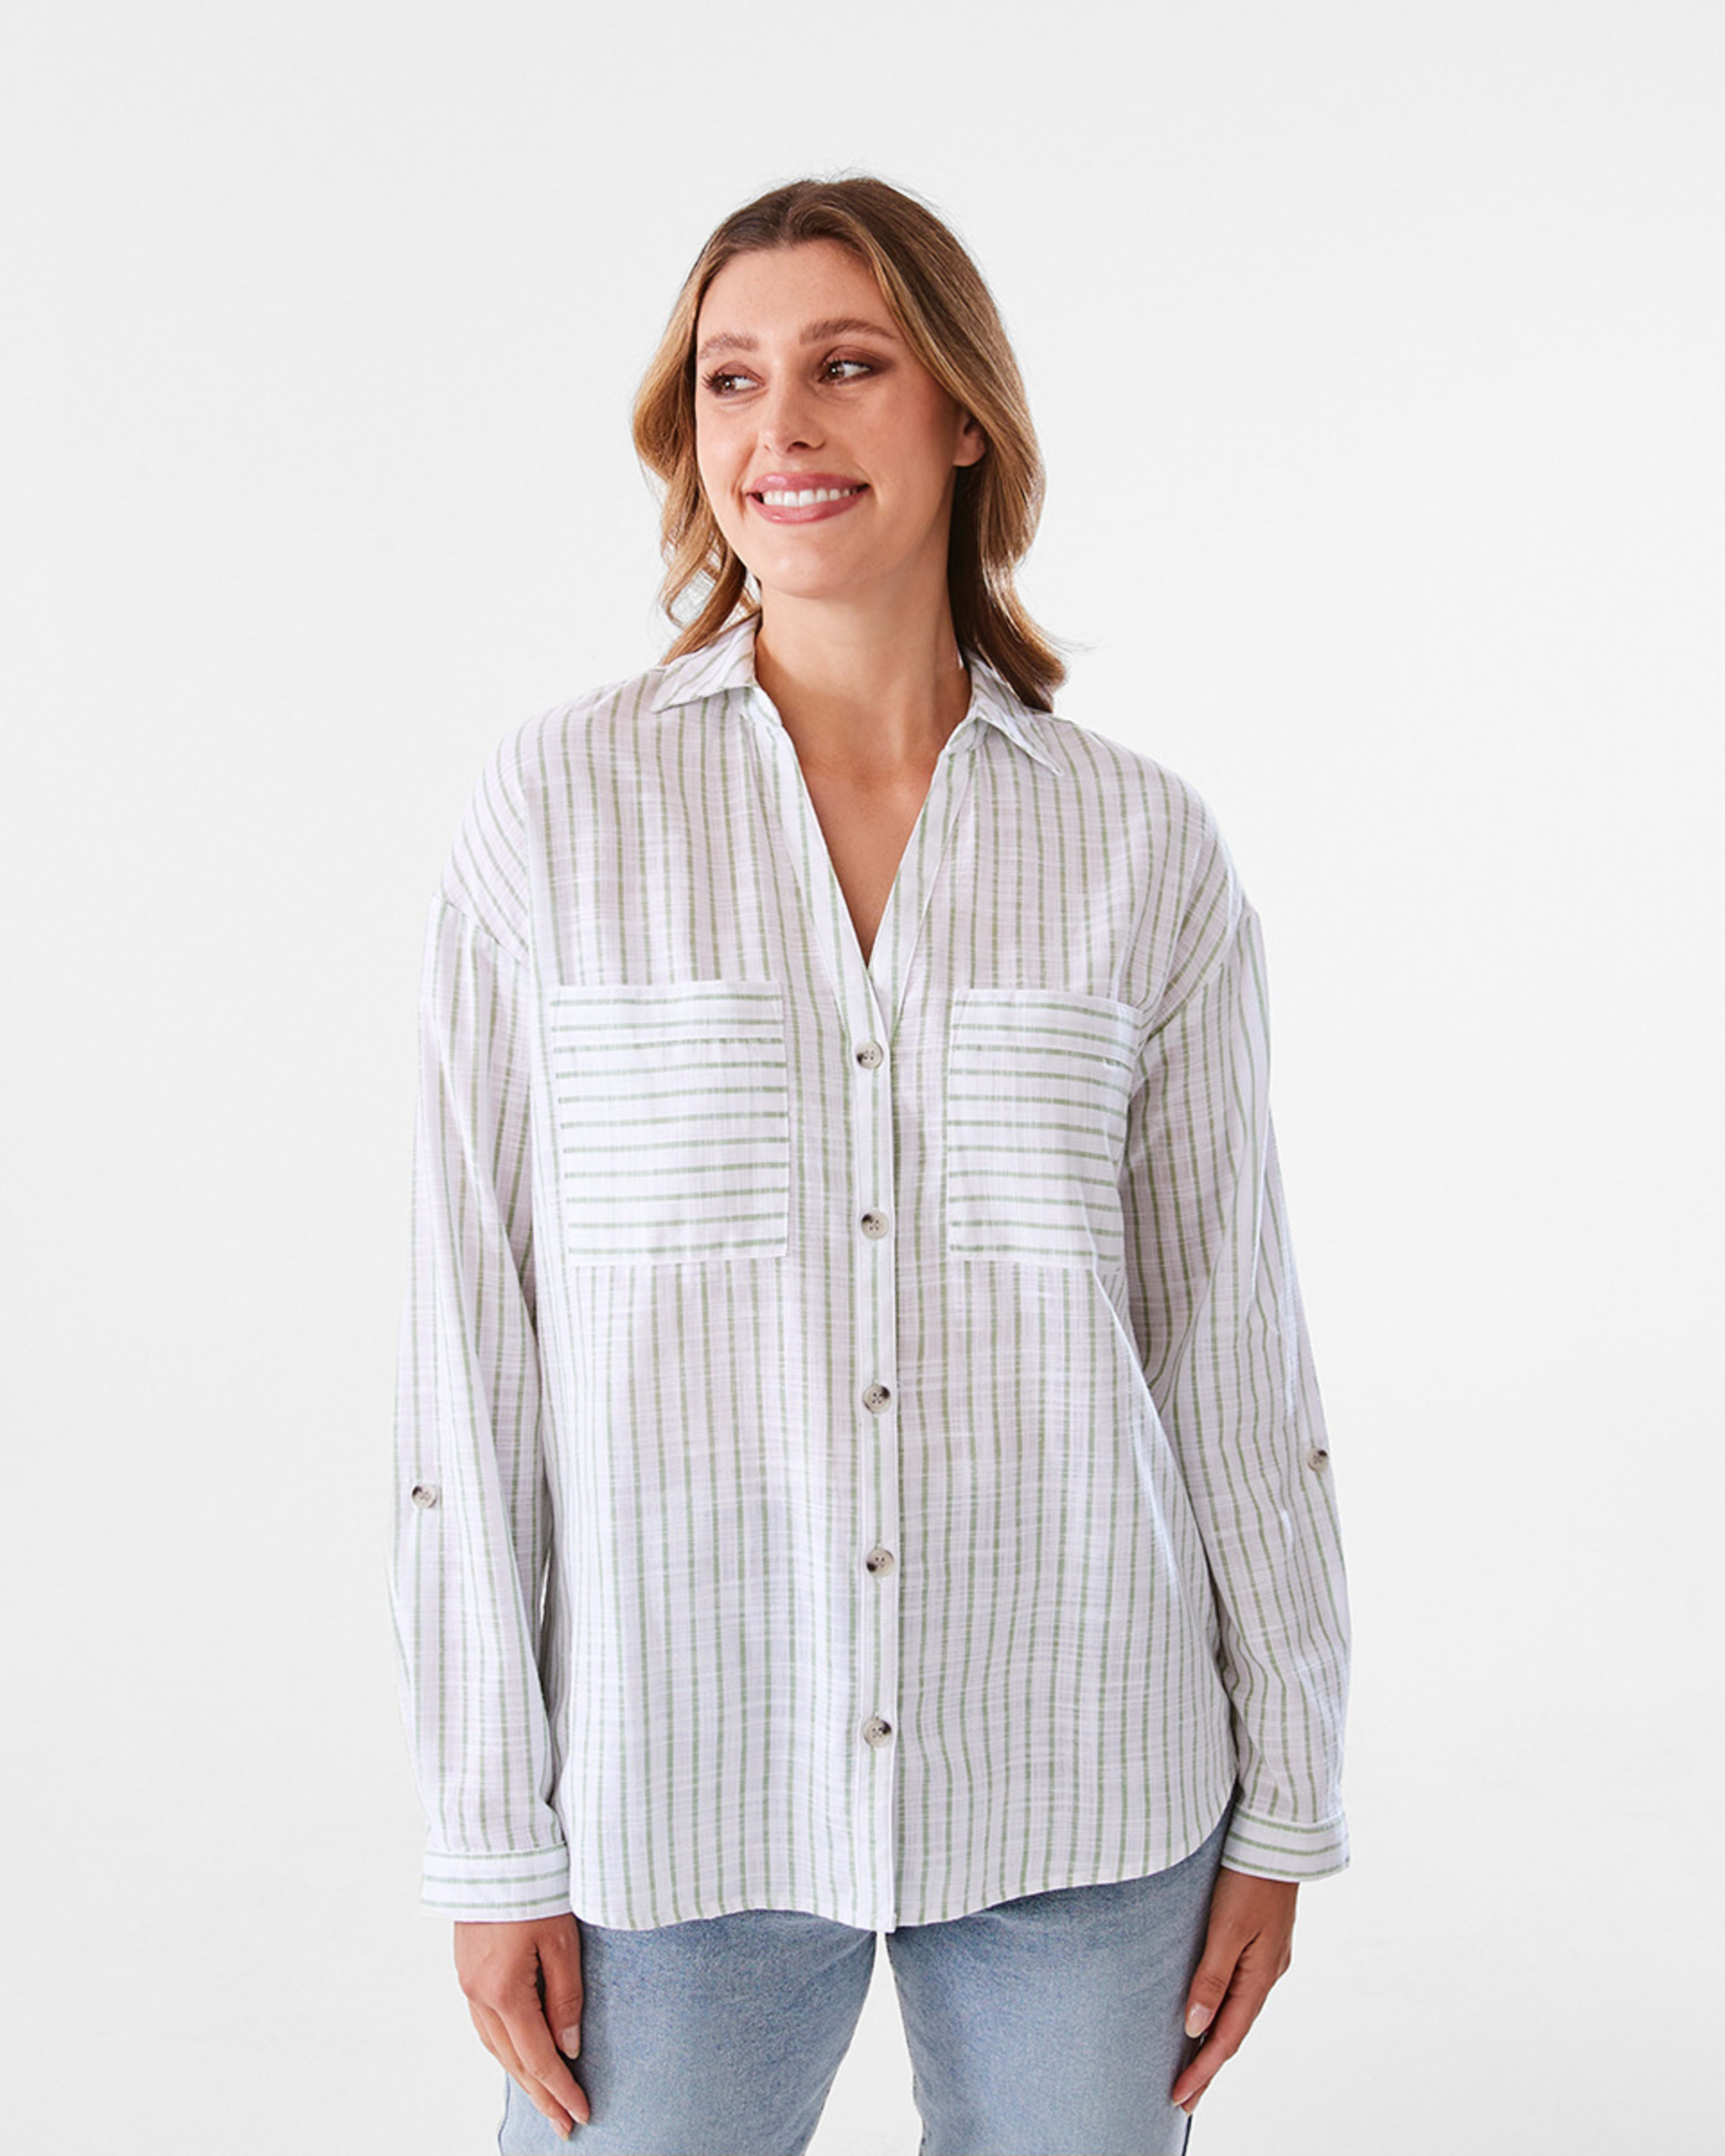 Rolled Sleeve Cotton Slub Shirt - Kmart